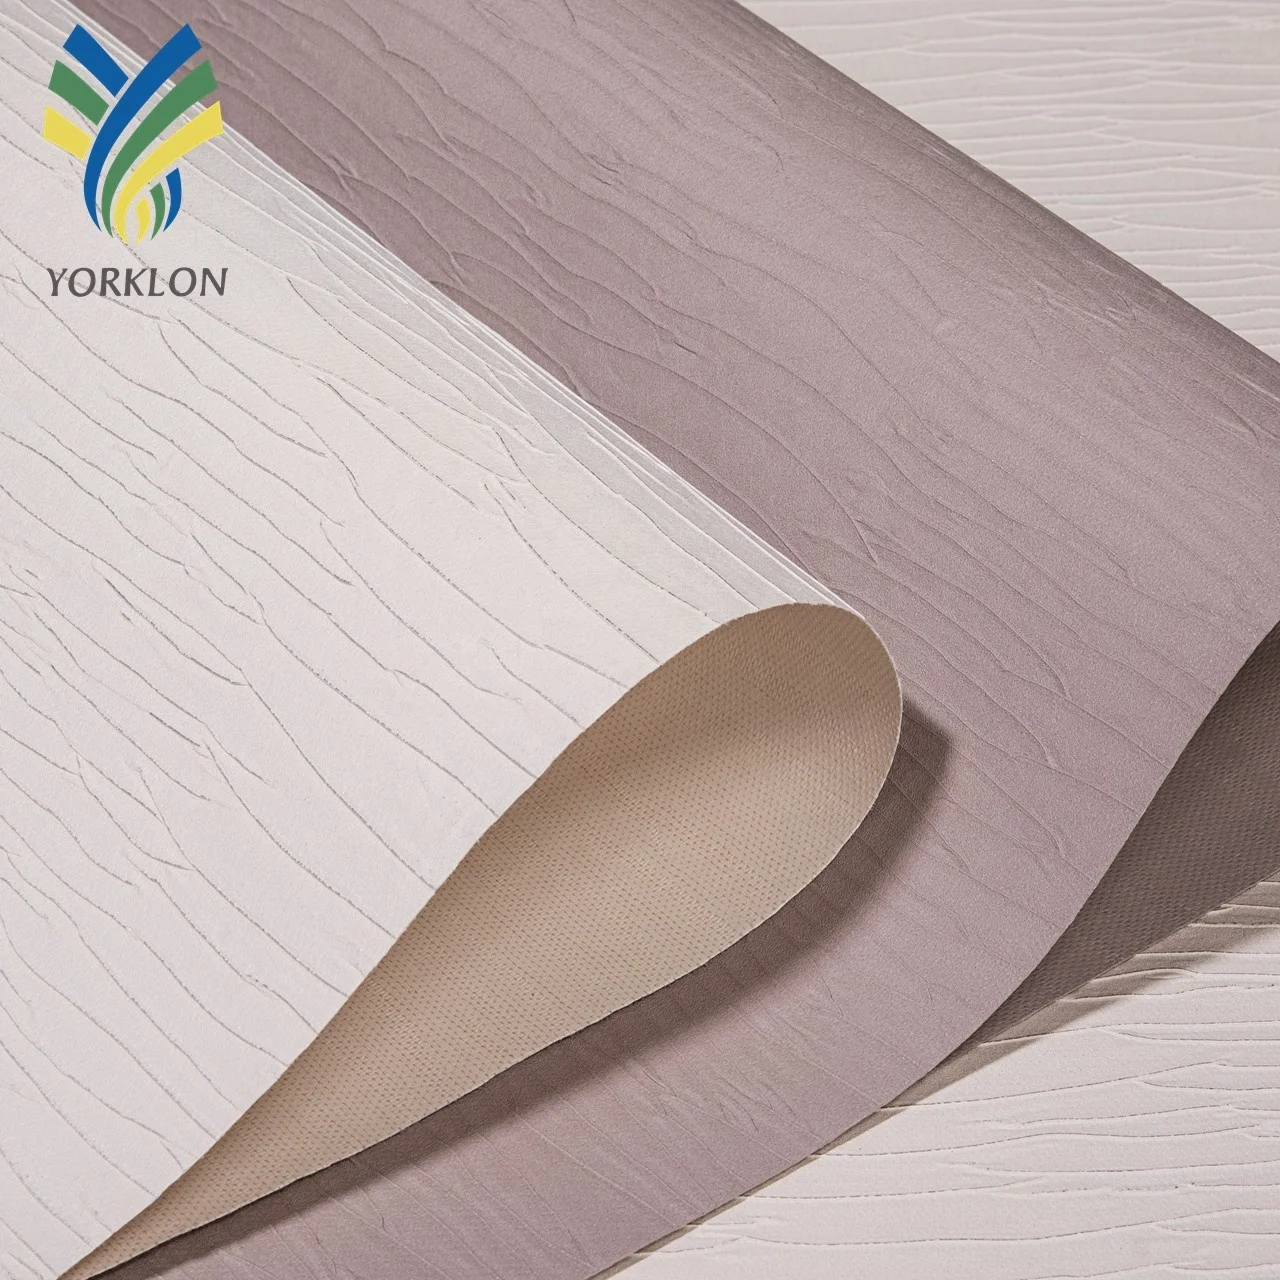 KF11 Hot Design wallpapers/wall coating 3D solid color texture fabric backed PVC vinyl wave liquid wallpaper for walls